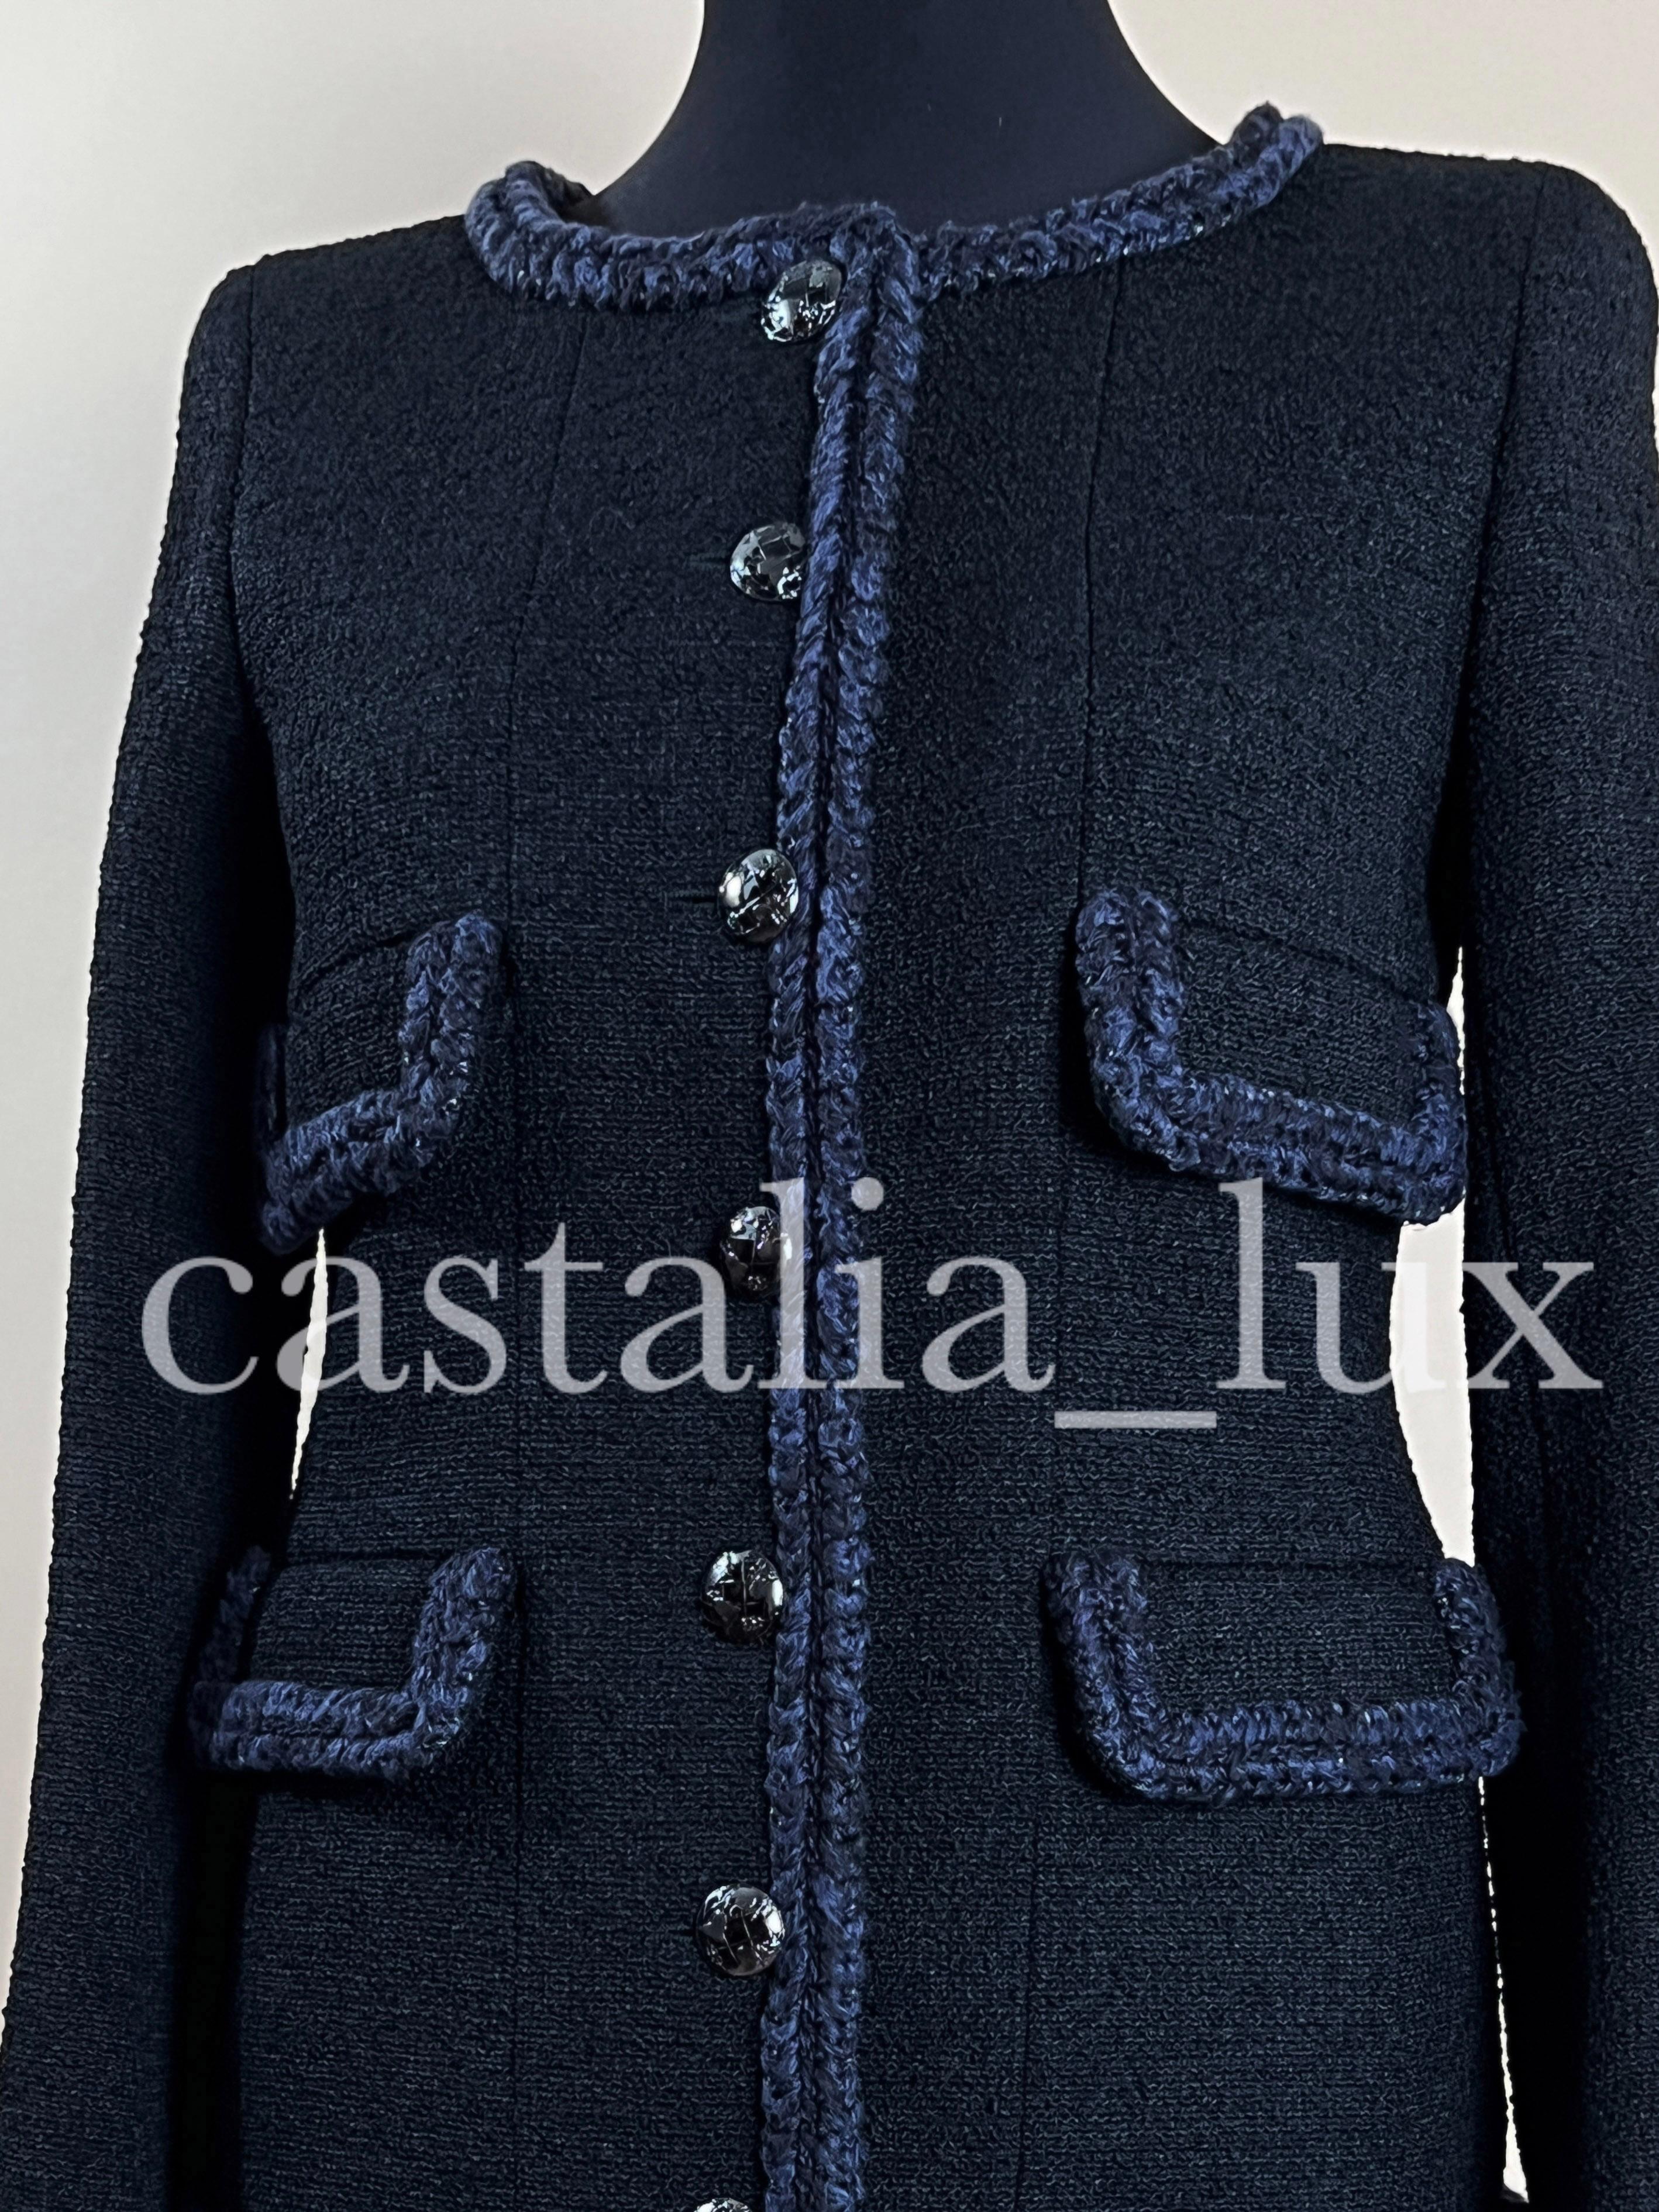 Chanel Iconic Keira Knightley Style Black Tweed Jacket 10